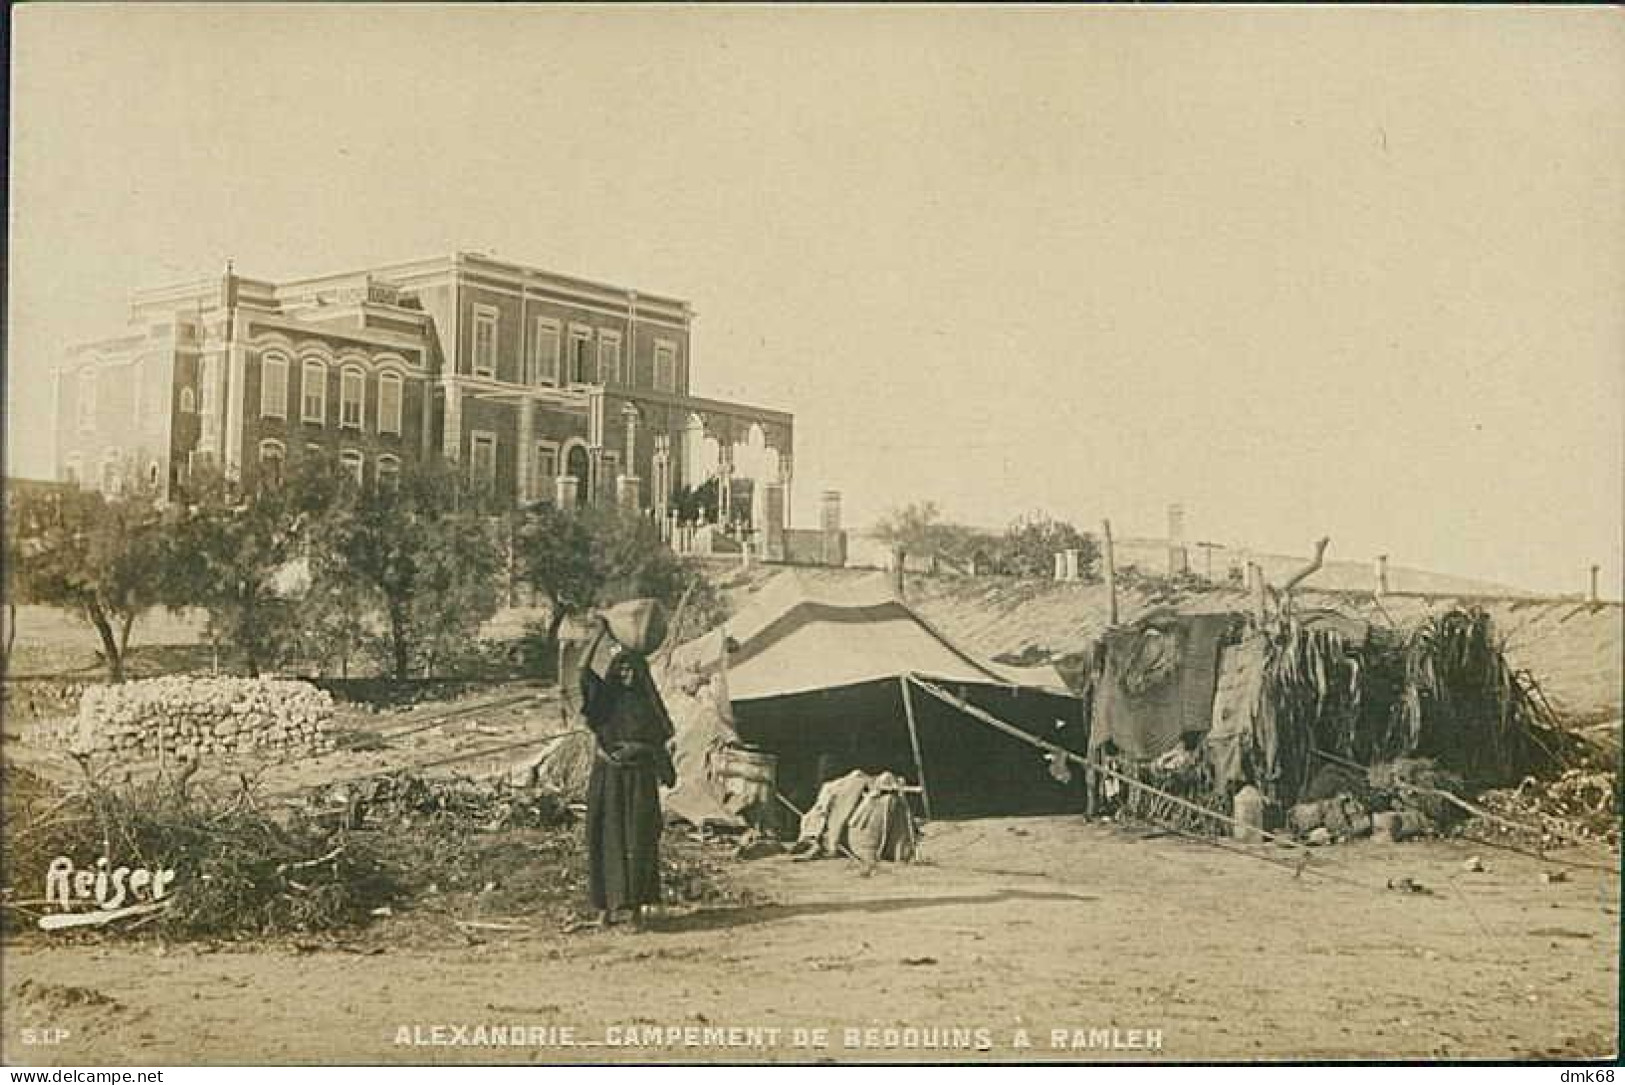 EGYPT - ALEXANDRIA / ALEXANDRIE - CAMPEMENT DE BEDUINS A RAMLEN - PHOTO REISER - RPPC POSTCARD - 1900s (12651) - Alexandria